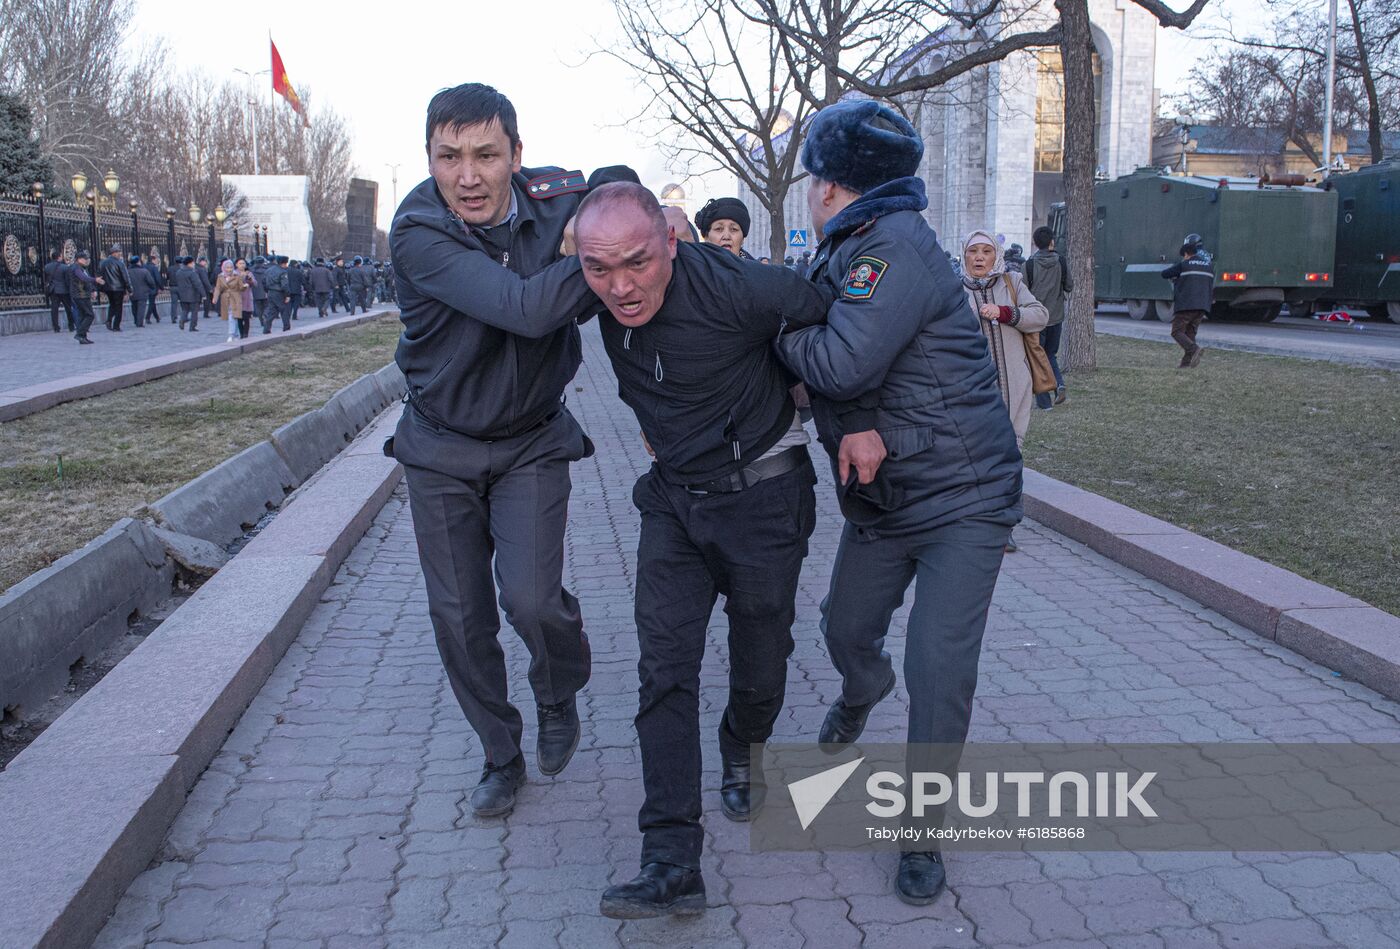 Kyrgyzstan Protests